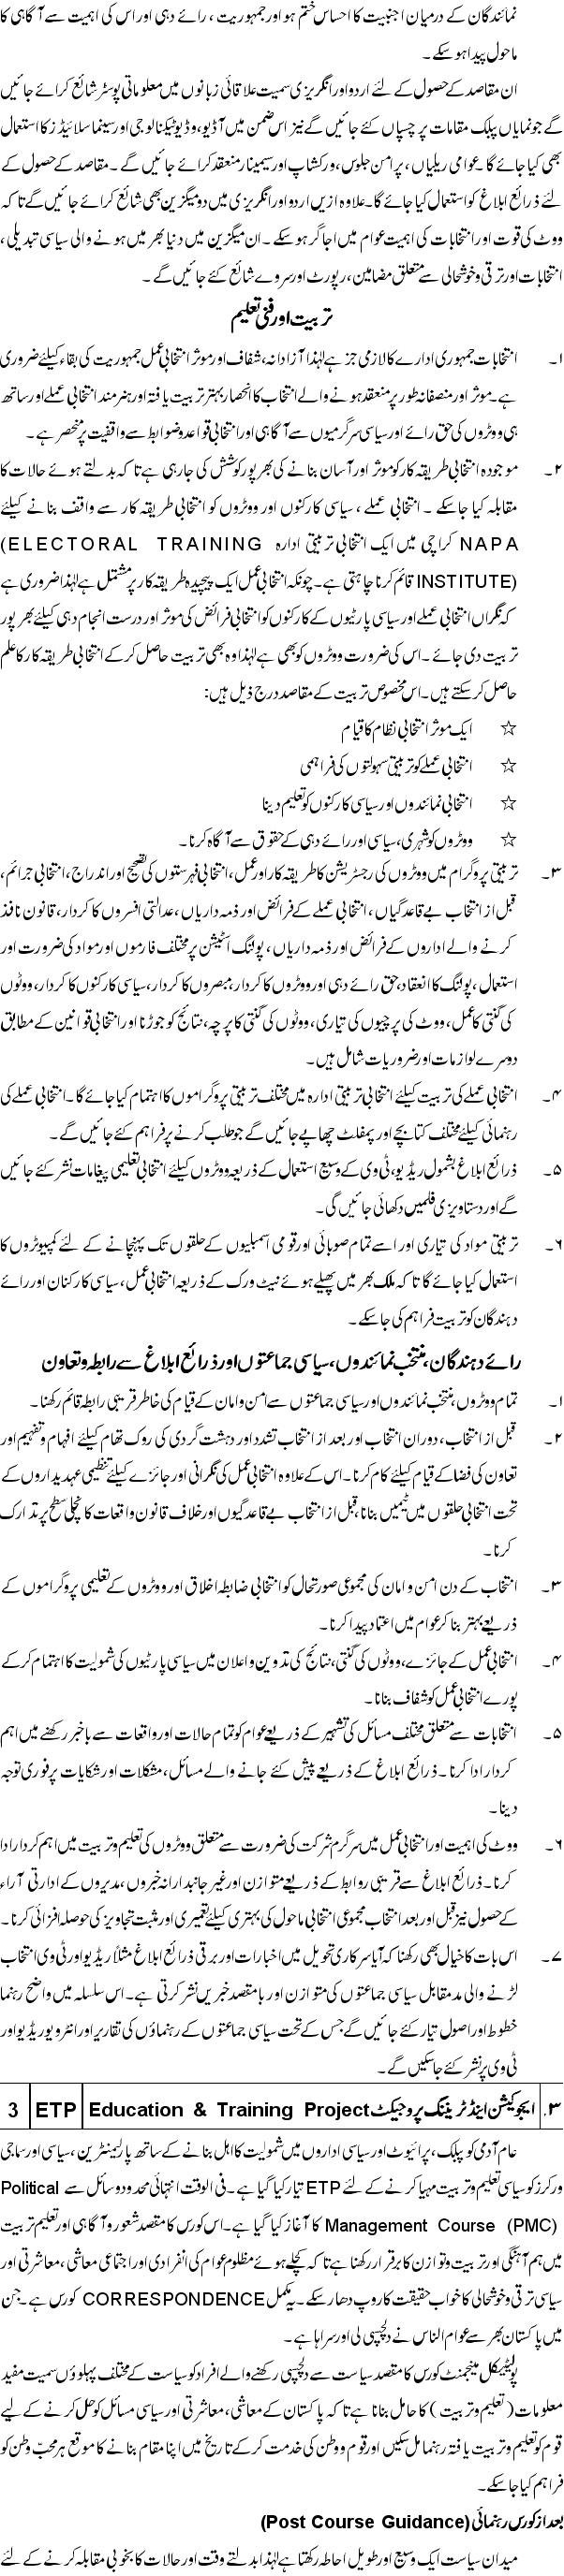 NAPA Prospectus Urdu